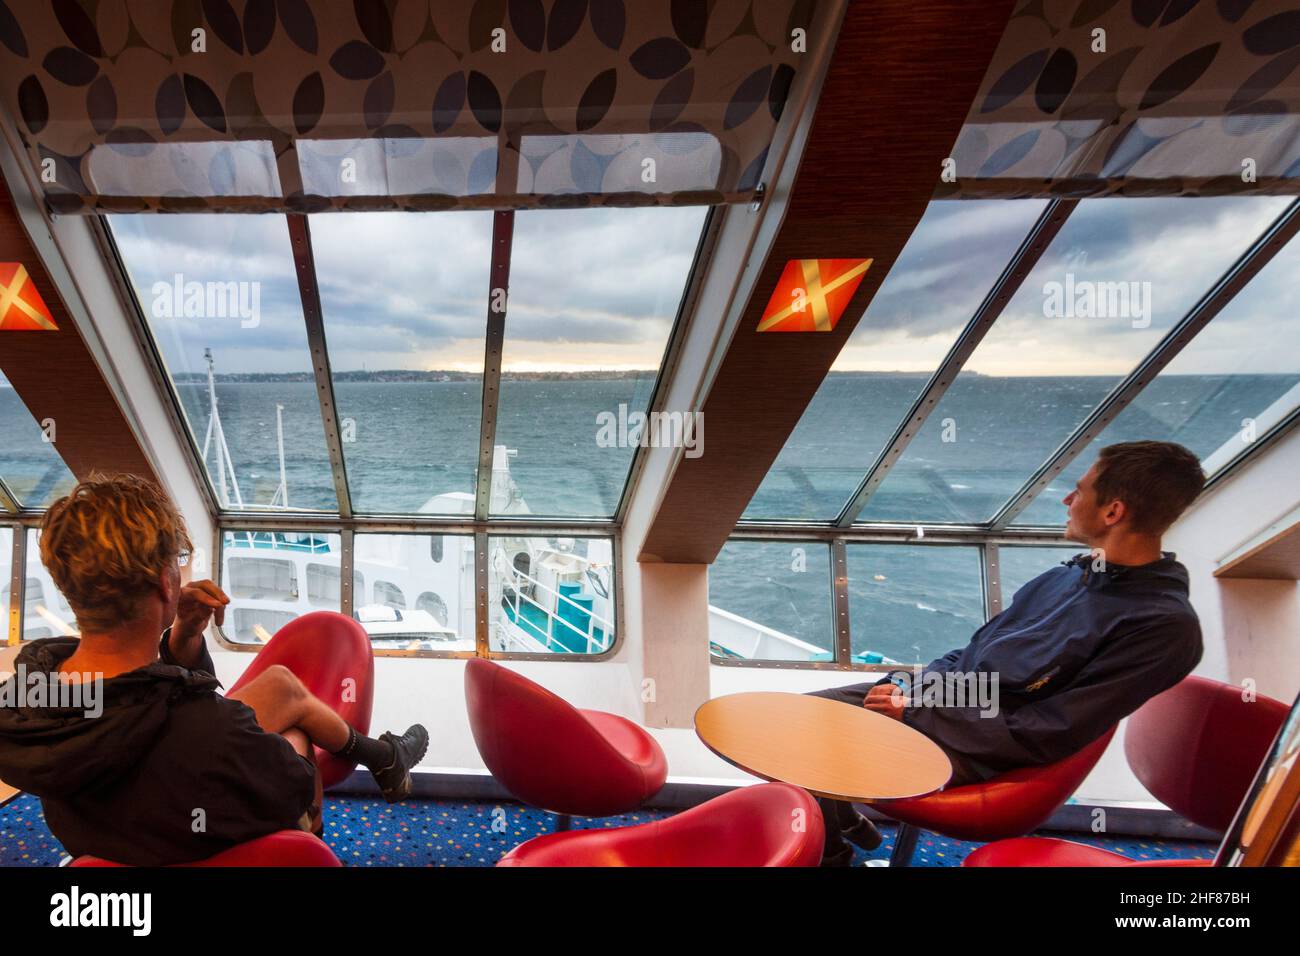 Helsingoer, sund Oeresund o Öresund, traghetto Helsingborg a Helsingör, i passeggeri guardano fuori dalla finestra in Helsingoer, Zelanda, Sealand, Sjaelland, Danimarca Foto Stock